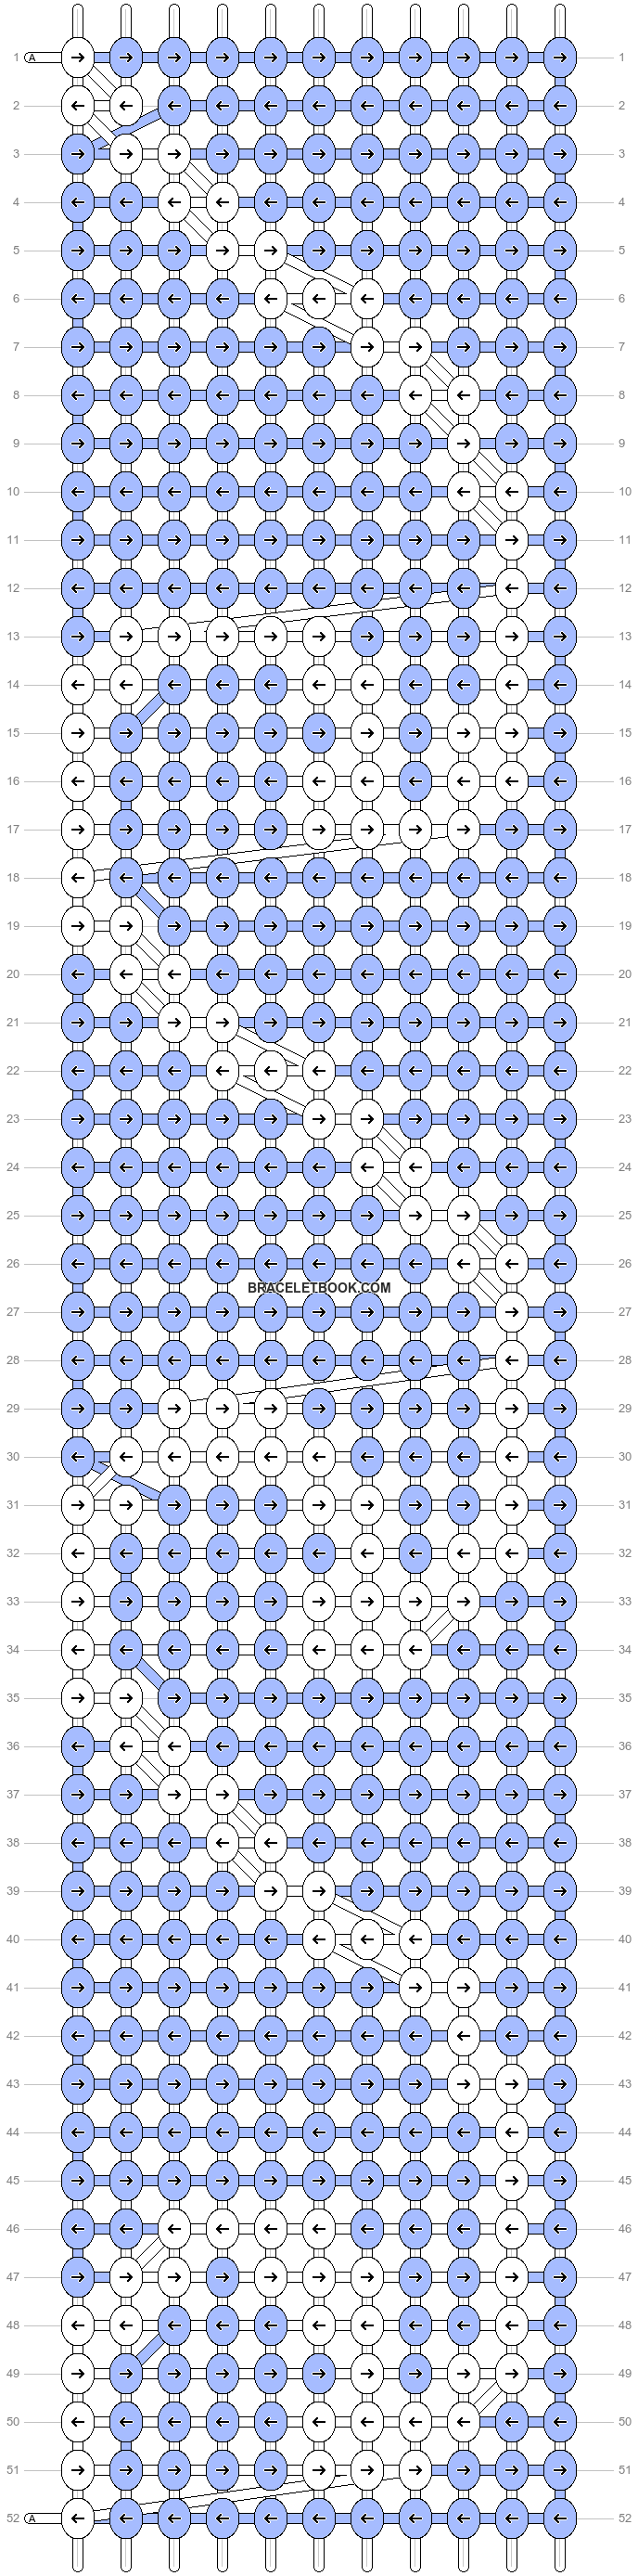 Alpha pattern #45382 pattern